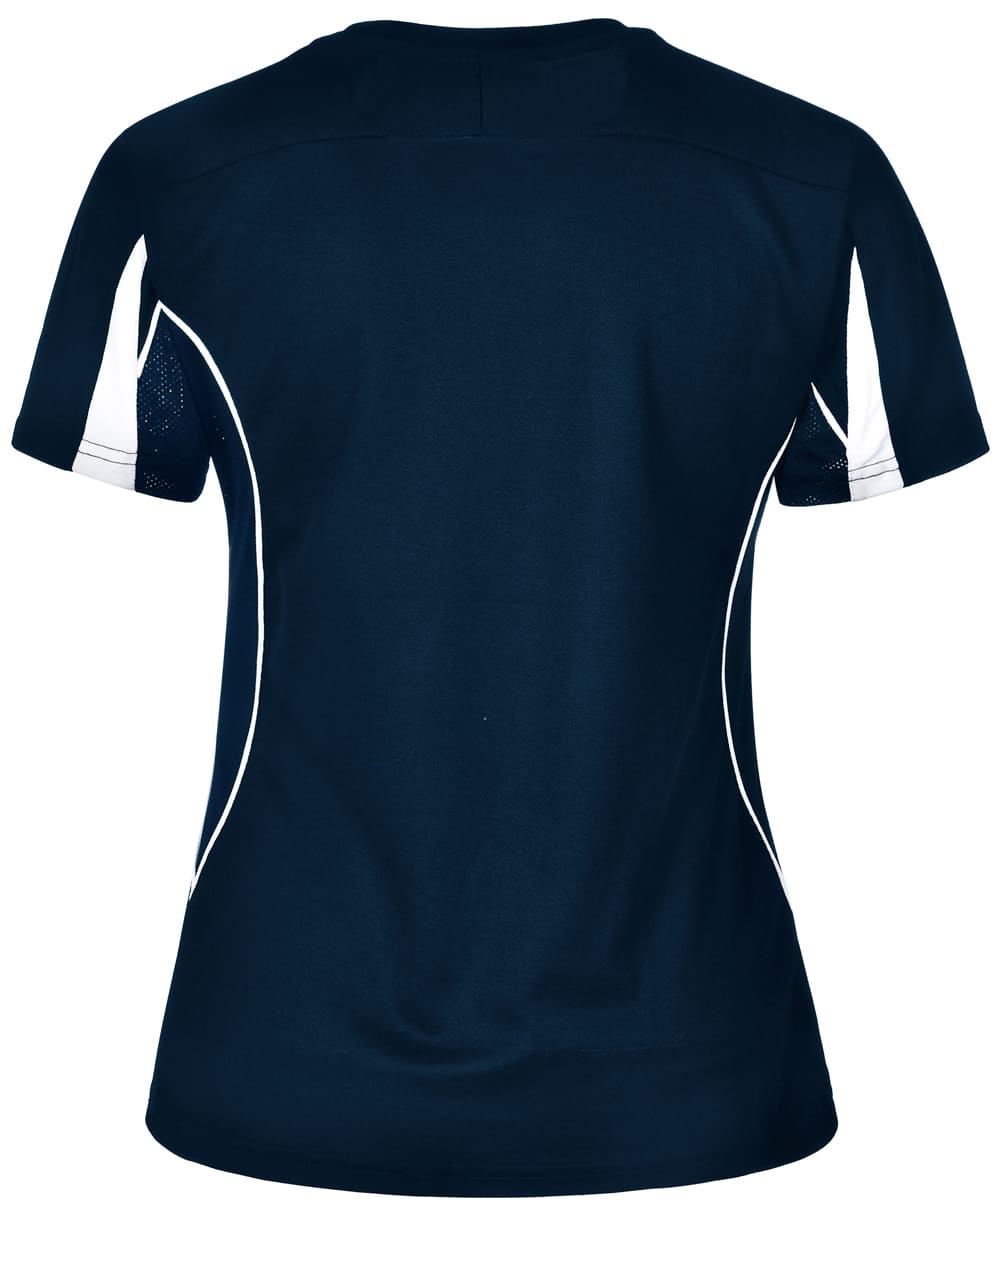 Custom Made (Navy Red) Legend Ladies Short Sleeve Tee Shirts Online in Perth